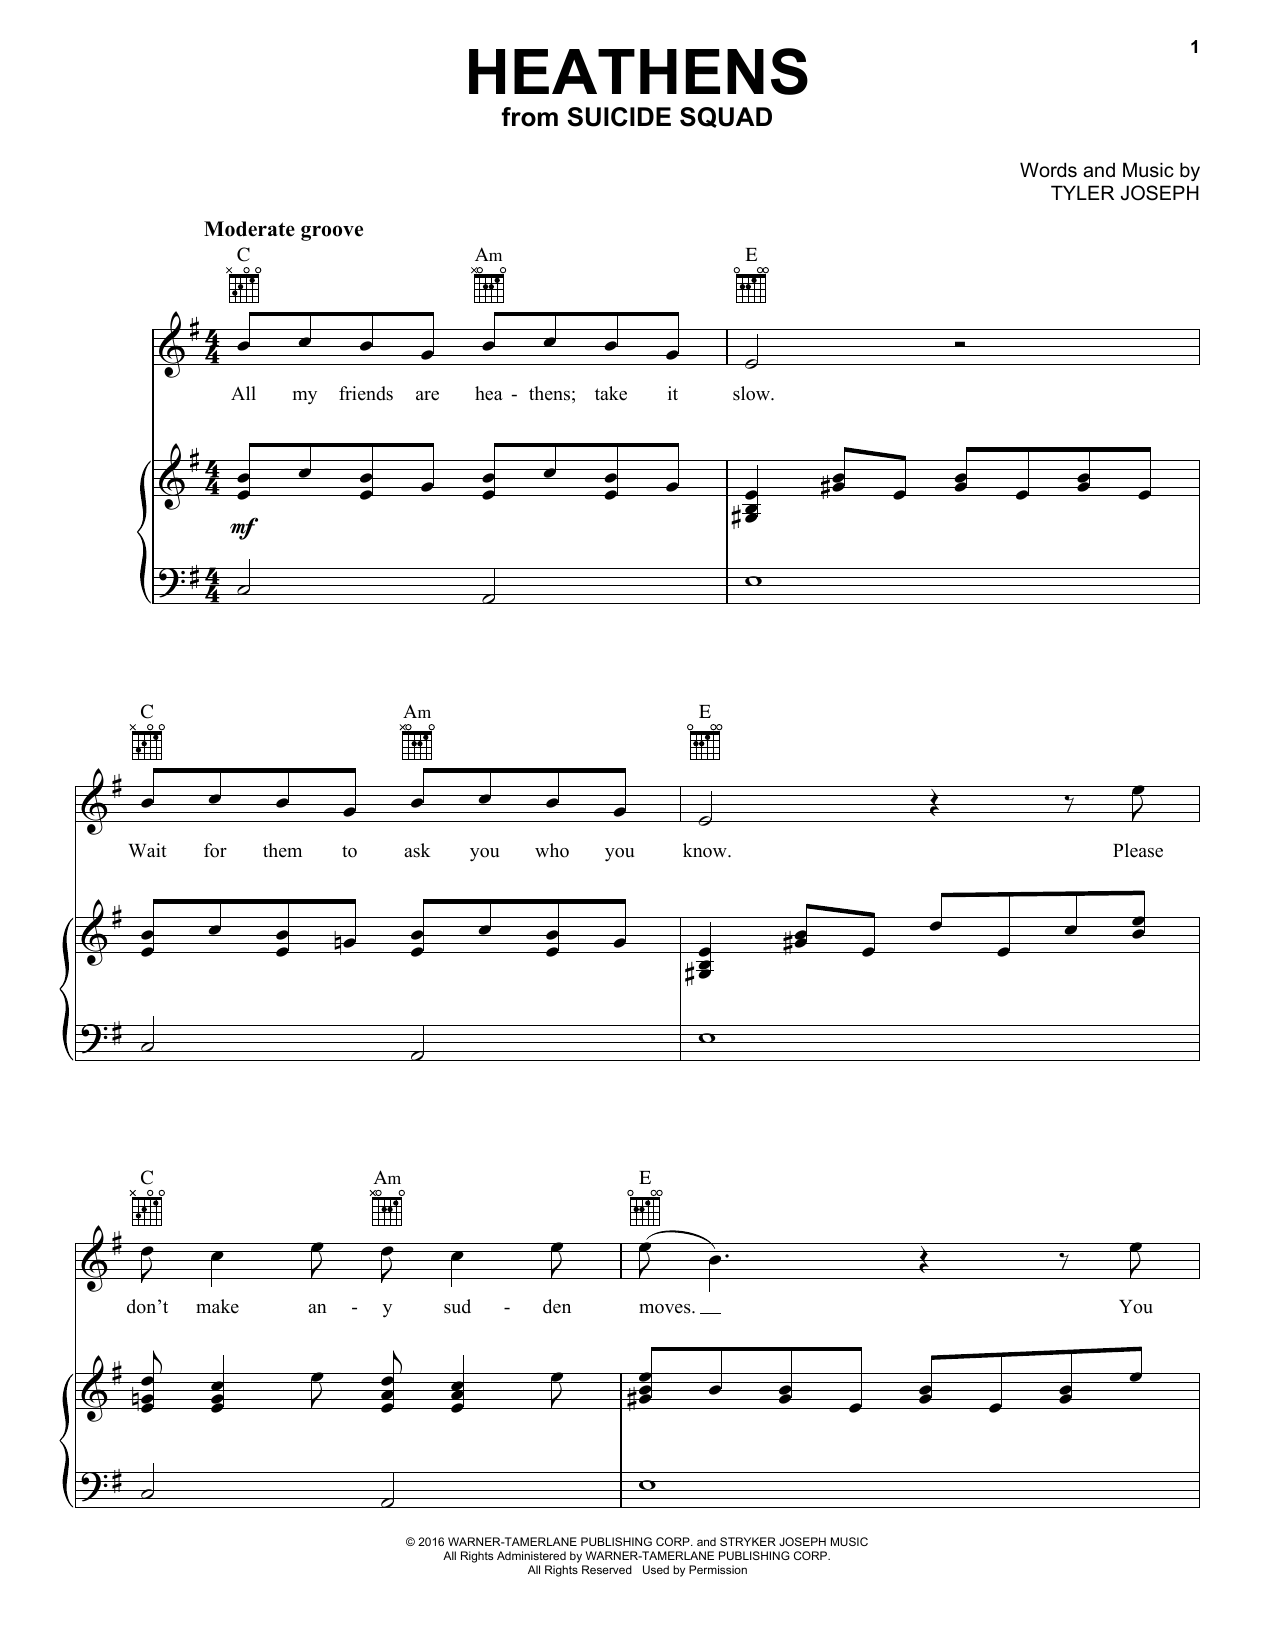 twenty one pilots Heathens Sheet Music Notes & Chords for Drums Transcription - Download or Print PDF